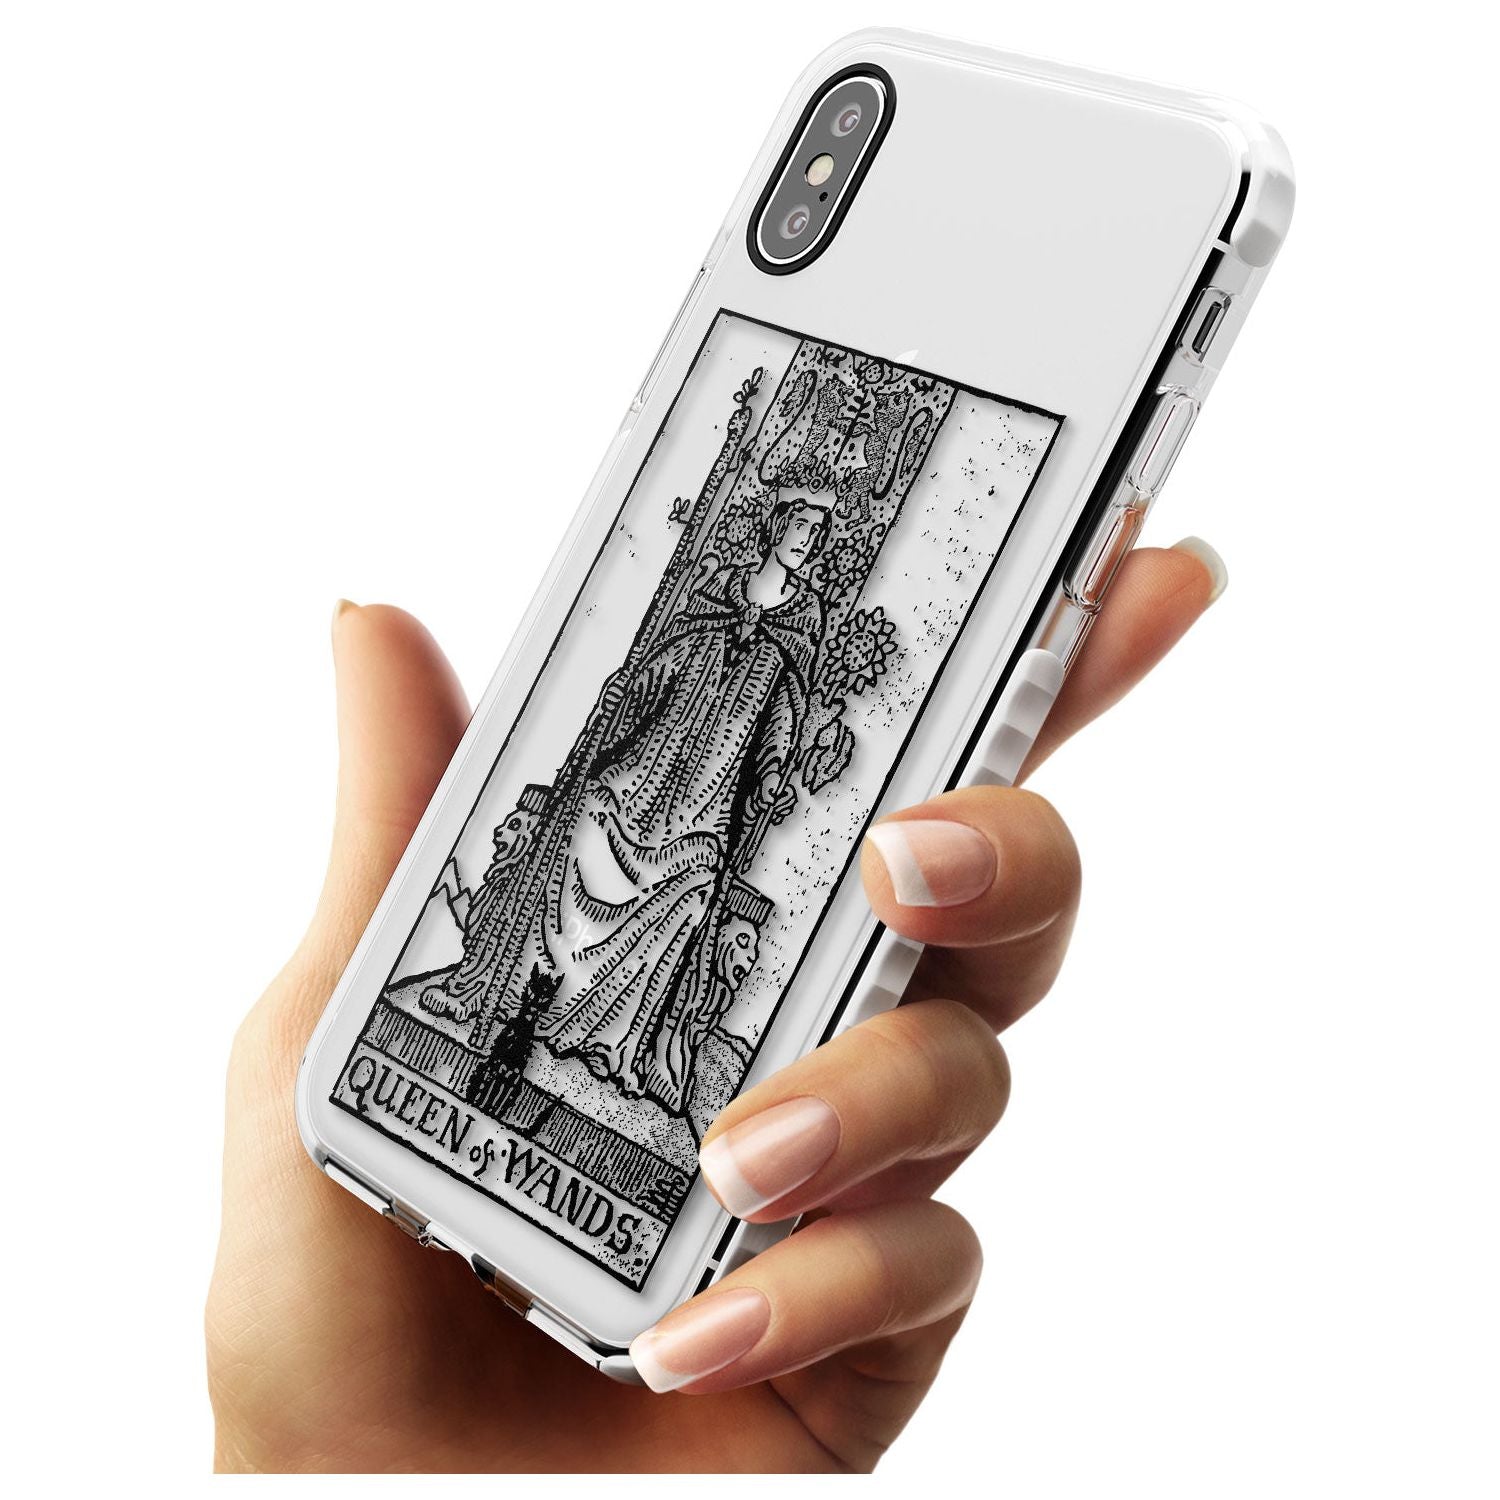 Queen of Wands Tarot Card - Transparent Slim TPU Phone Case Warehouse X XS Max XR